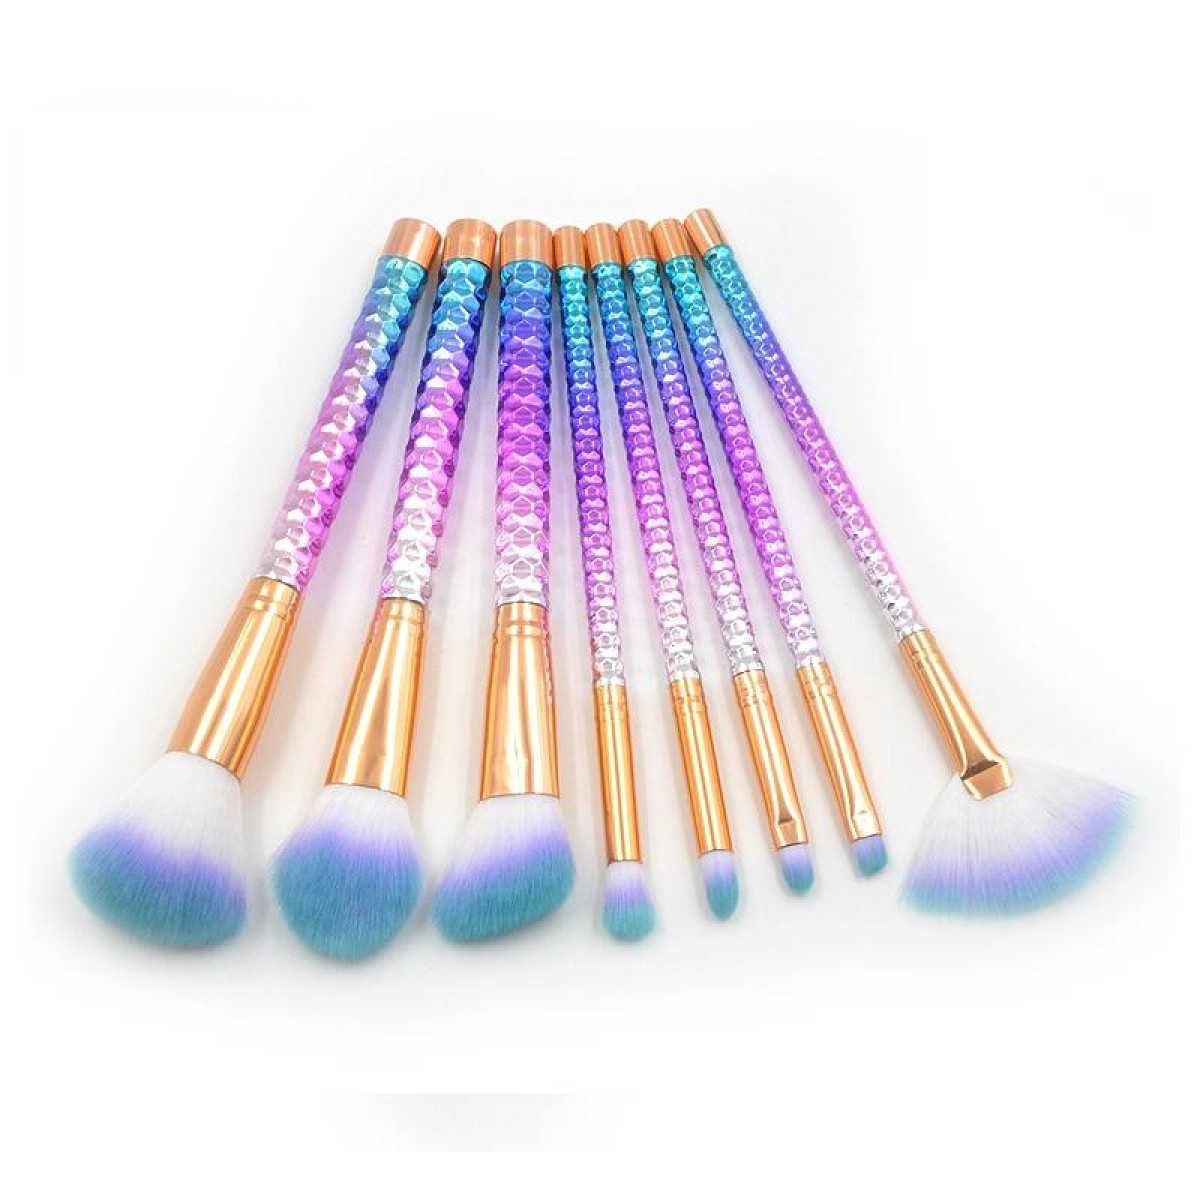 8 in 1 Honeycomb Handle Multi-functional Makeup Brush, Purple Handle and Blue Brush